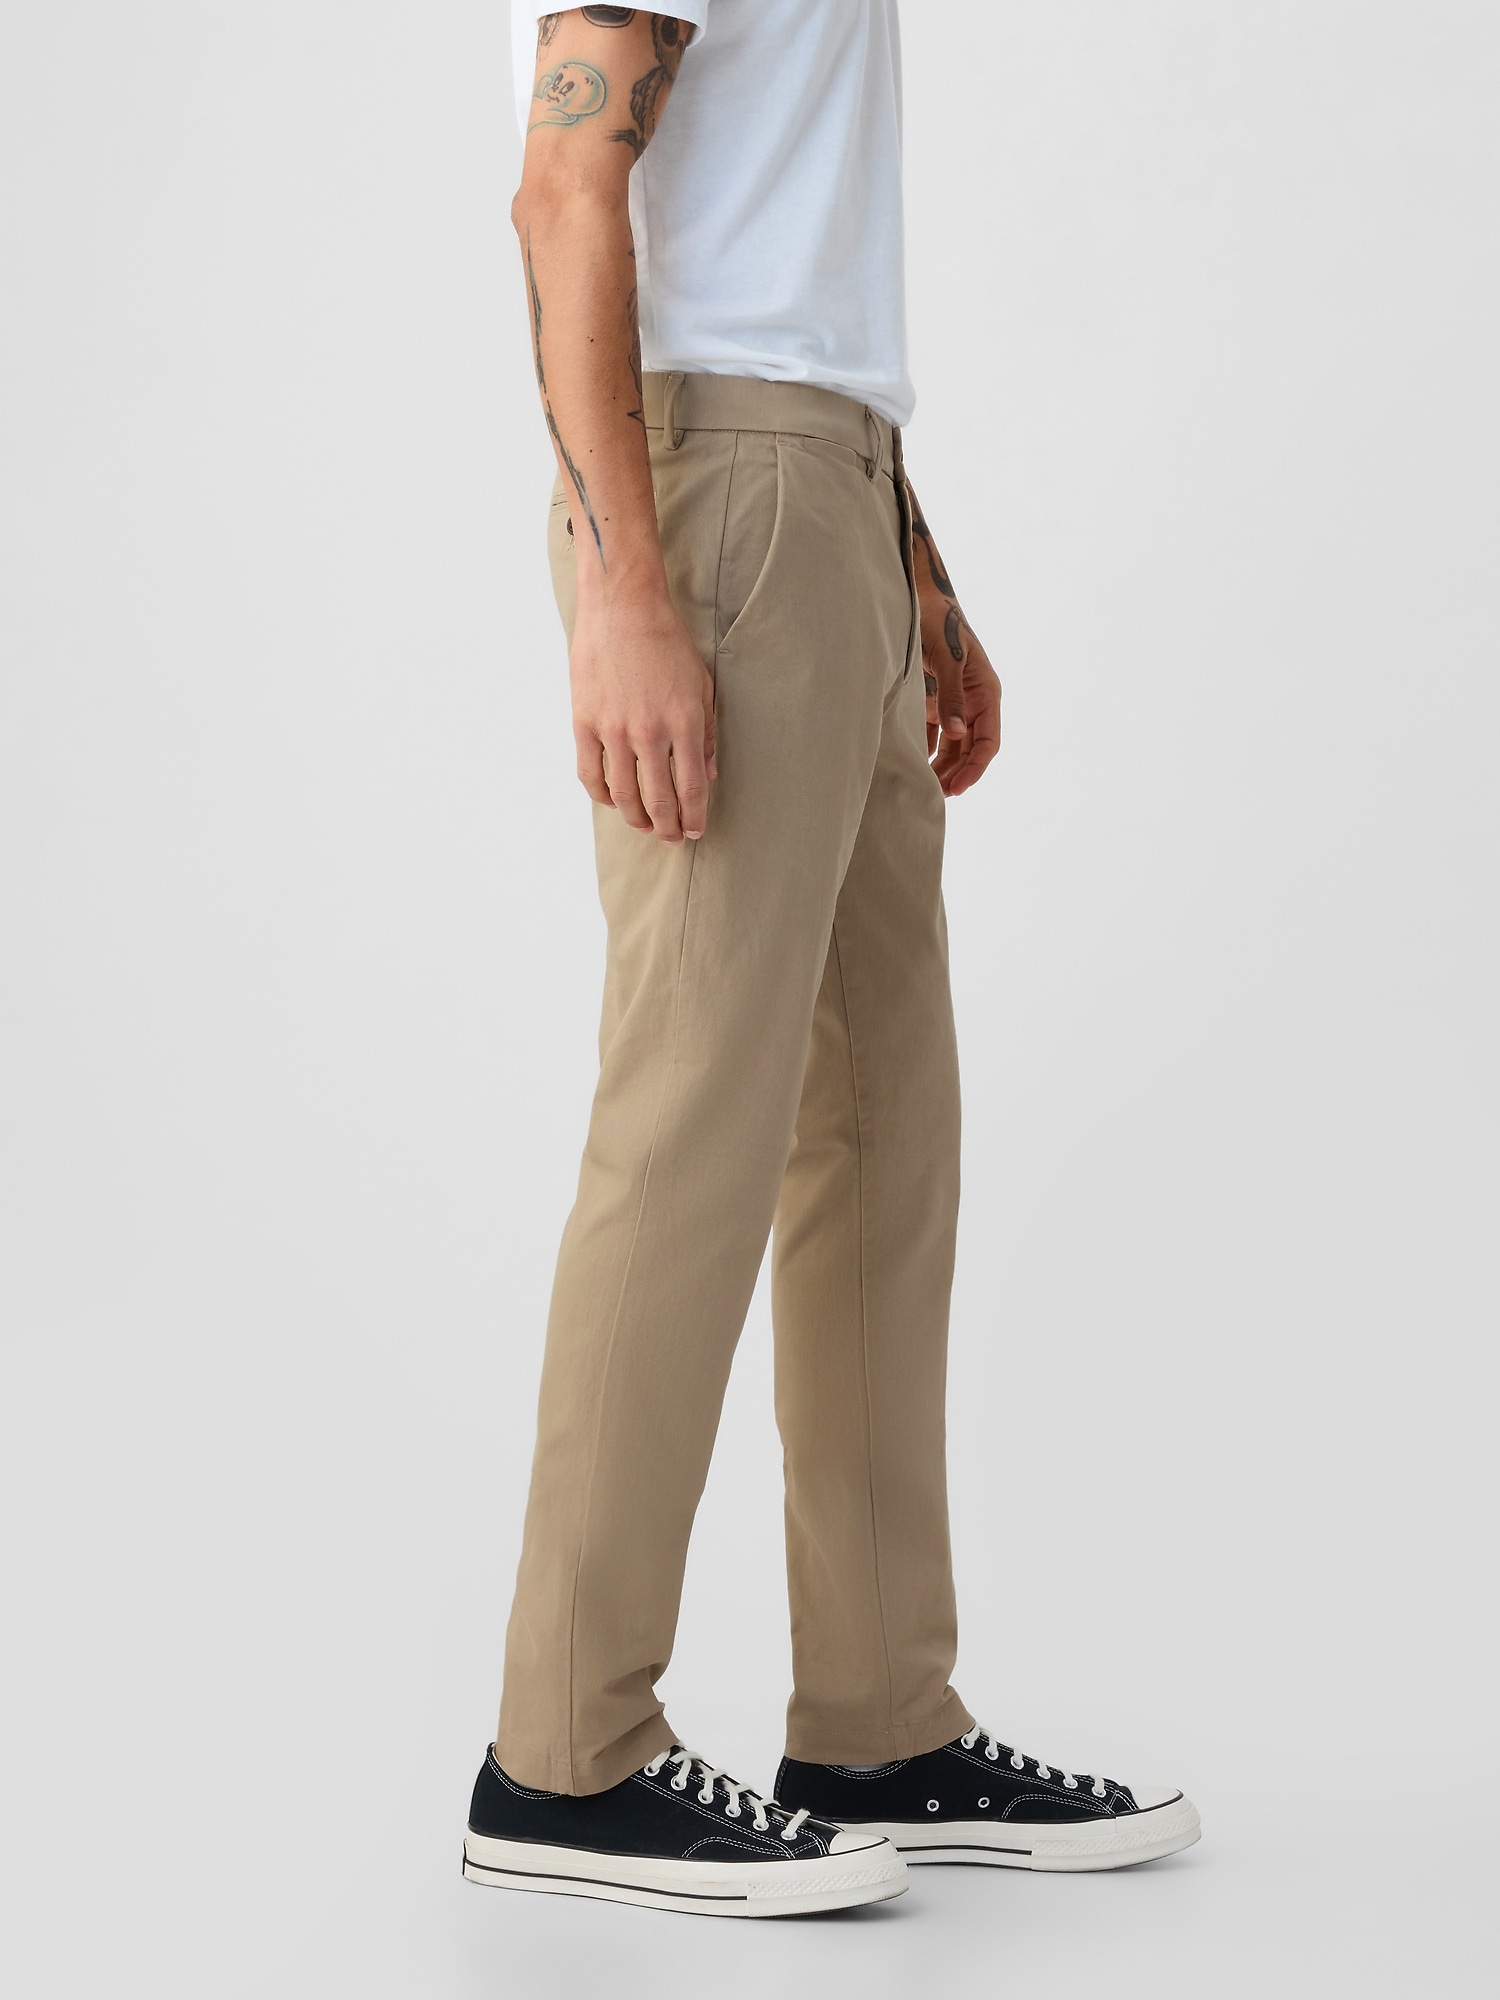 Modern Khakis Skinny Fit with GapFlex